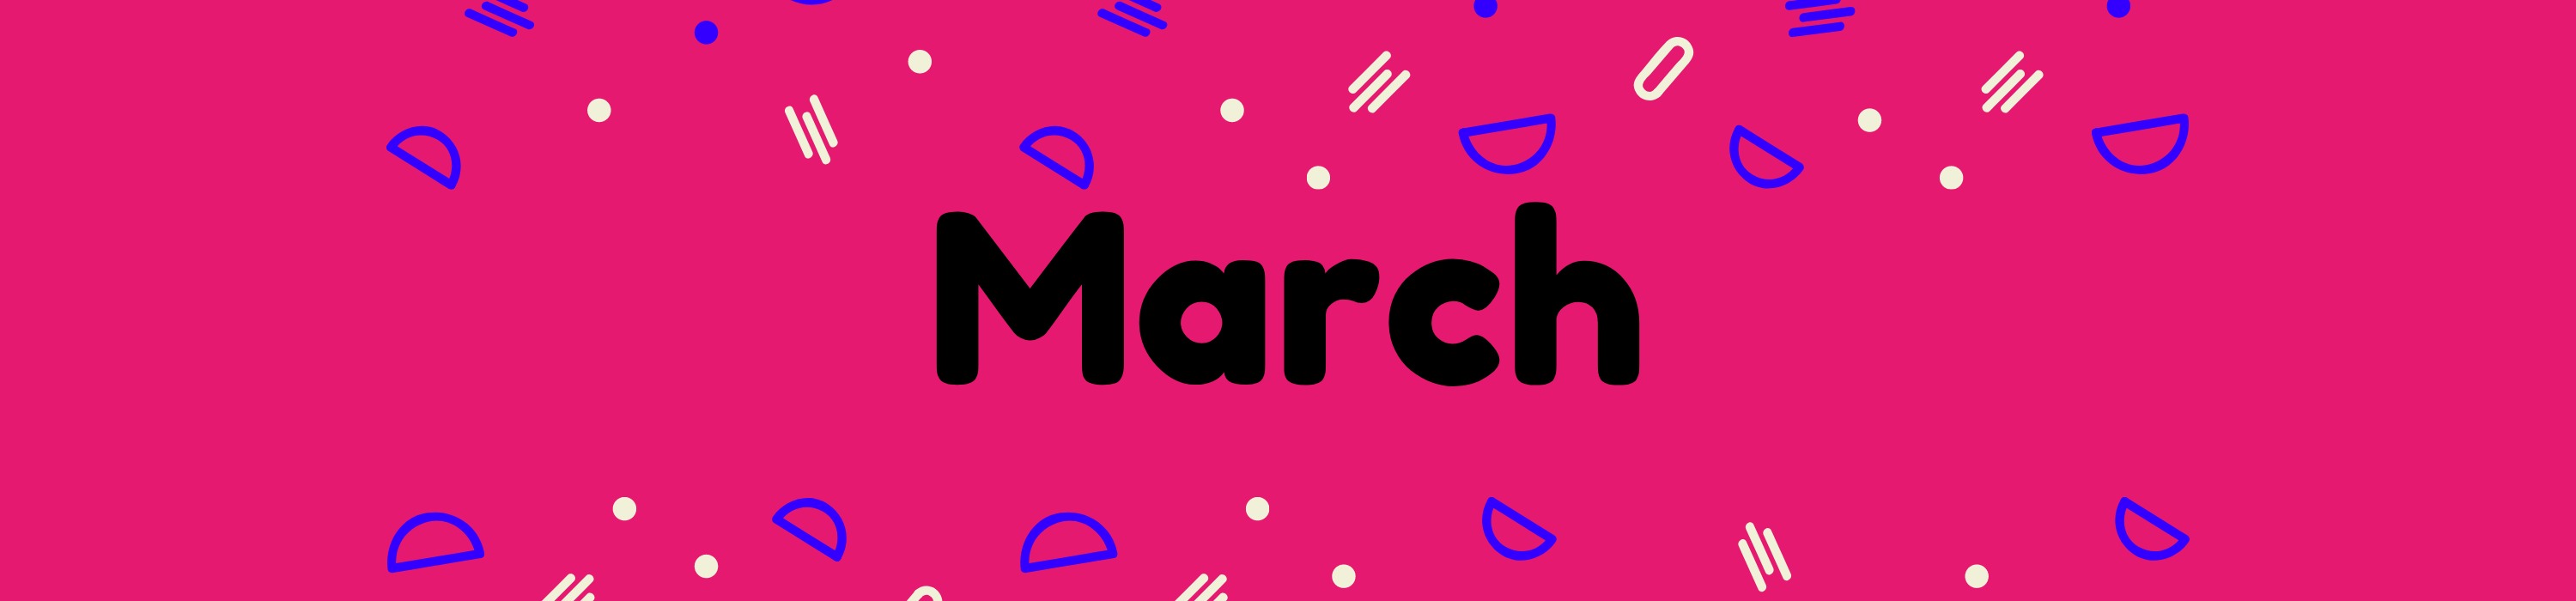 March-banner